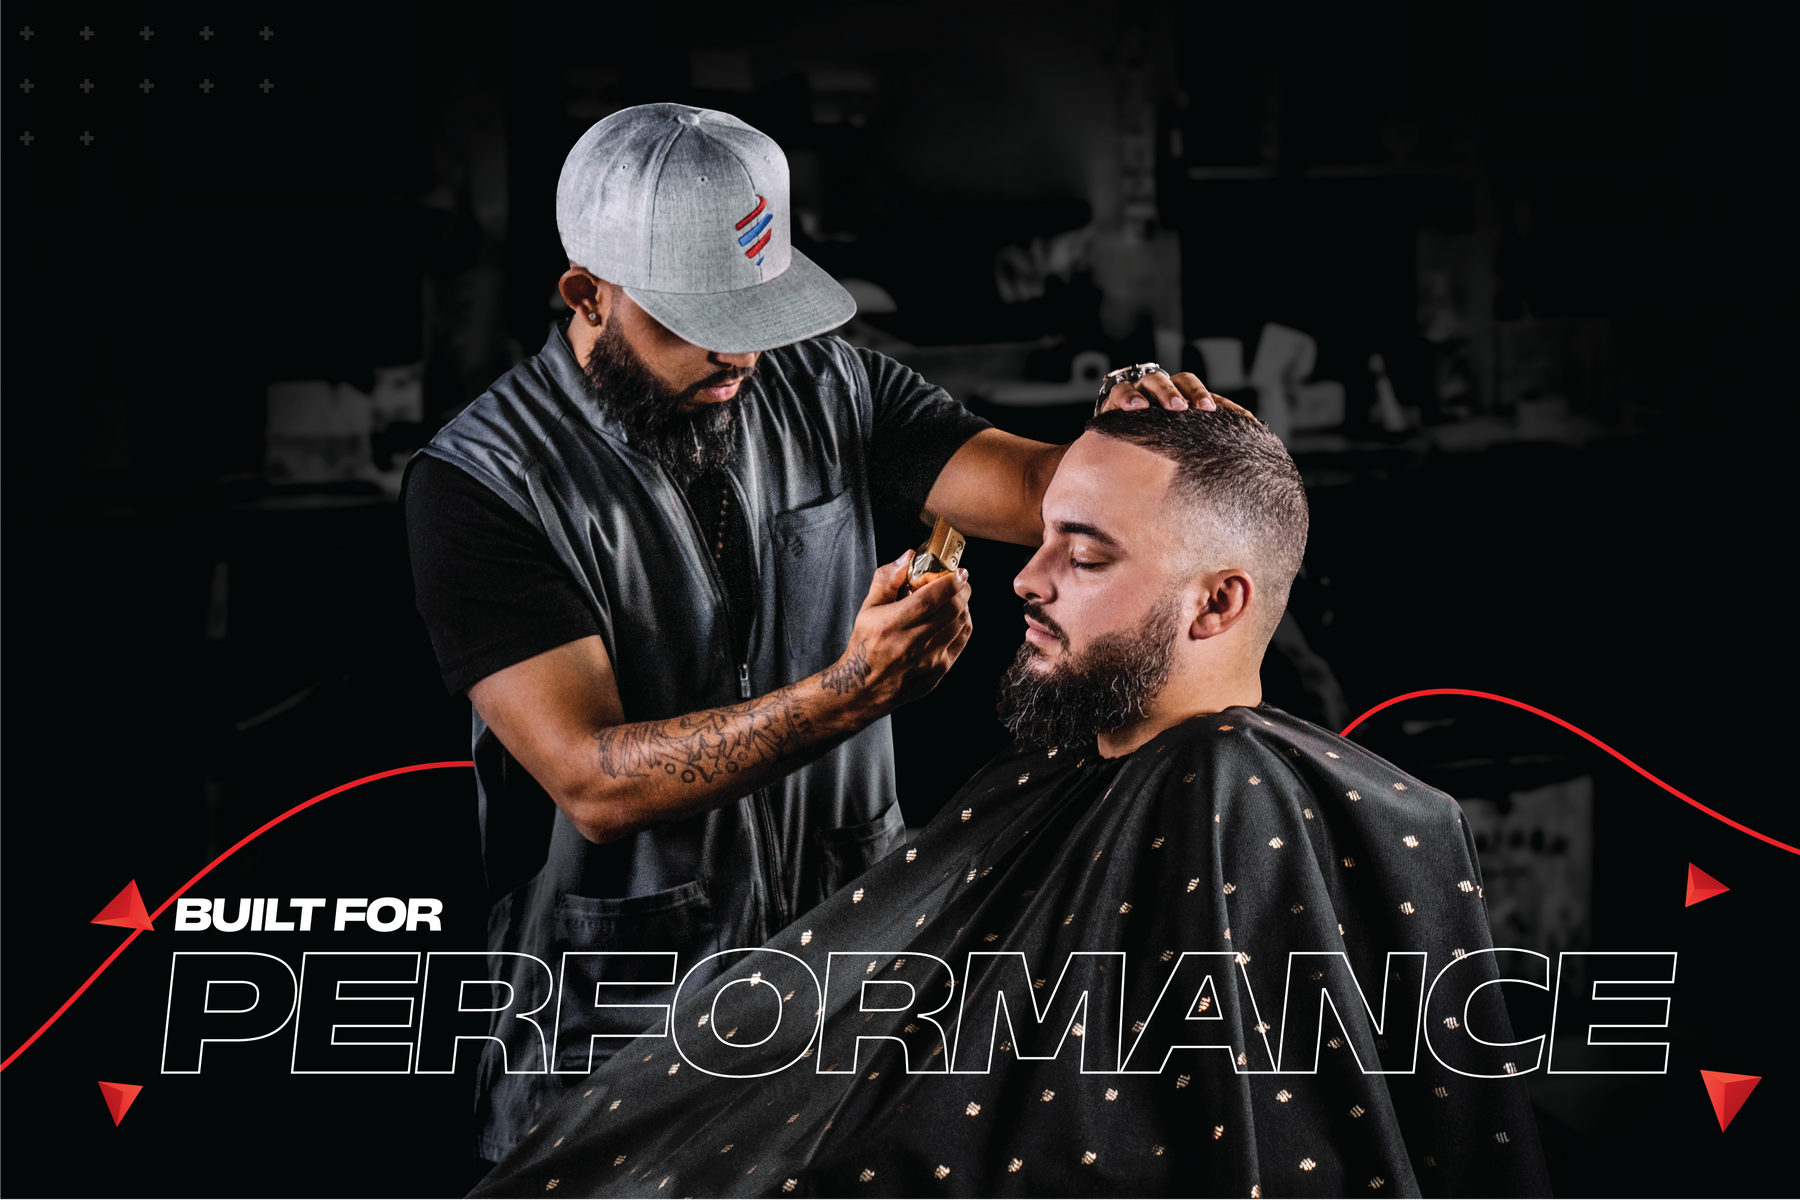 TRES Brazilian Barbershop (@tres.barbershop) • Instagram photos and videos